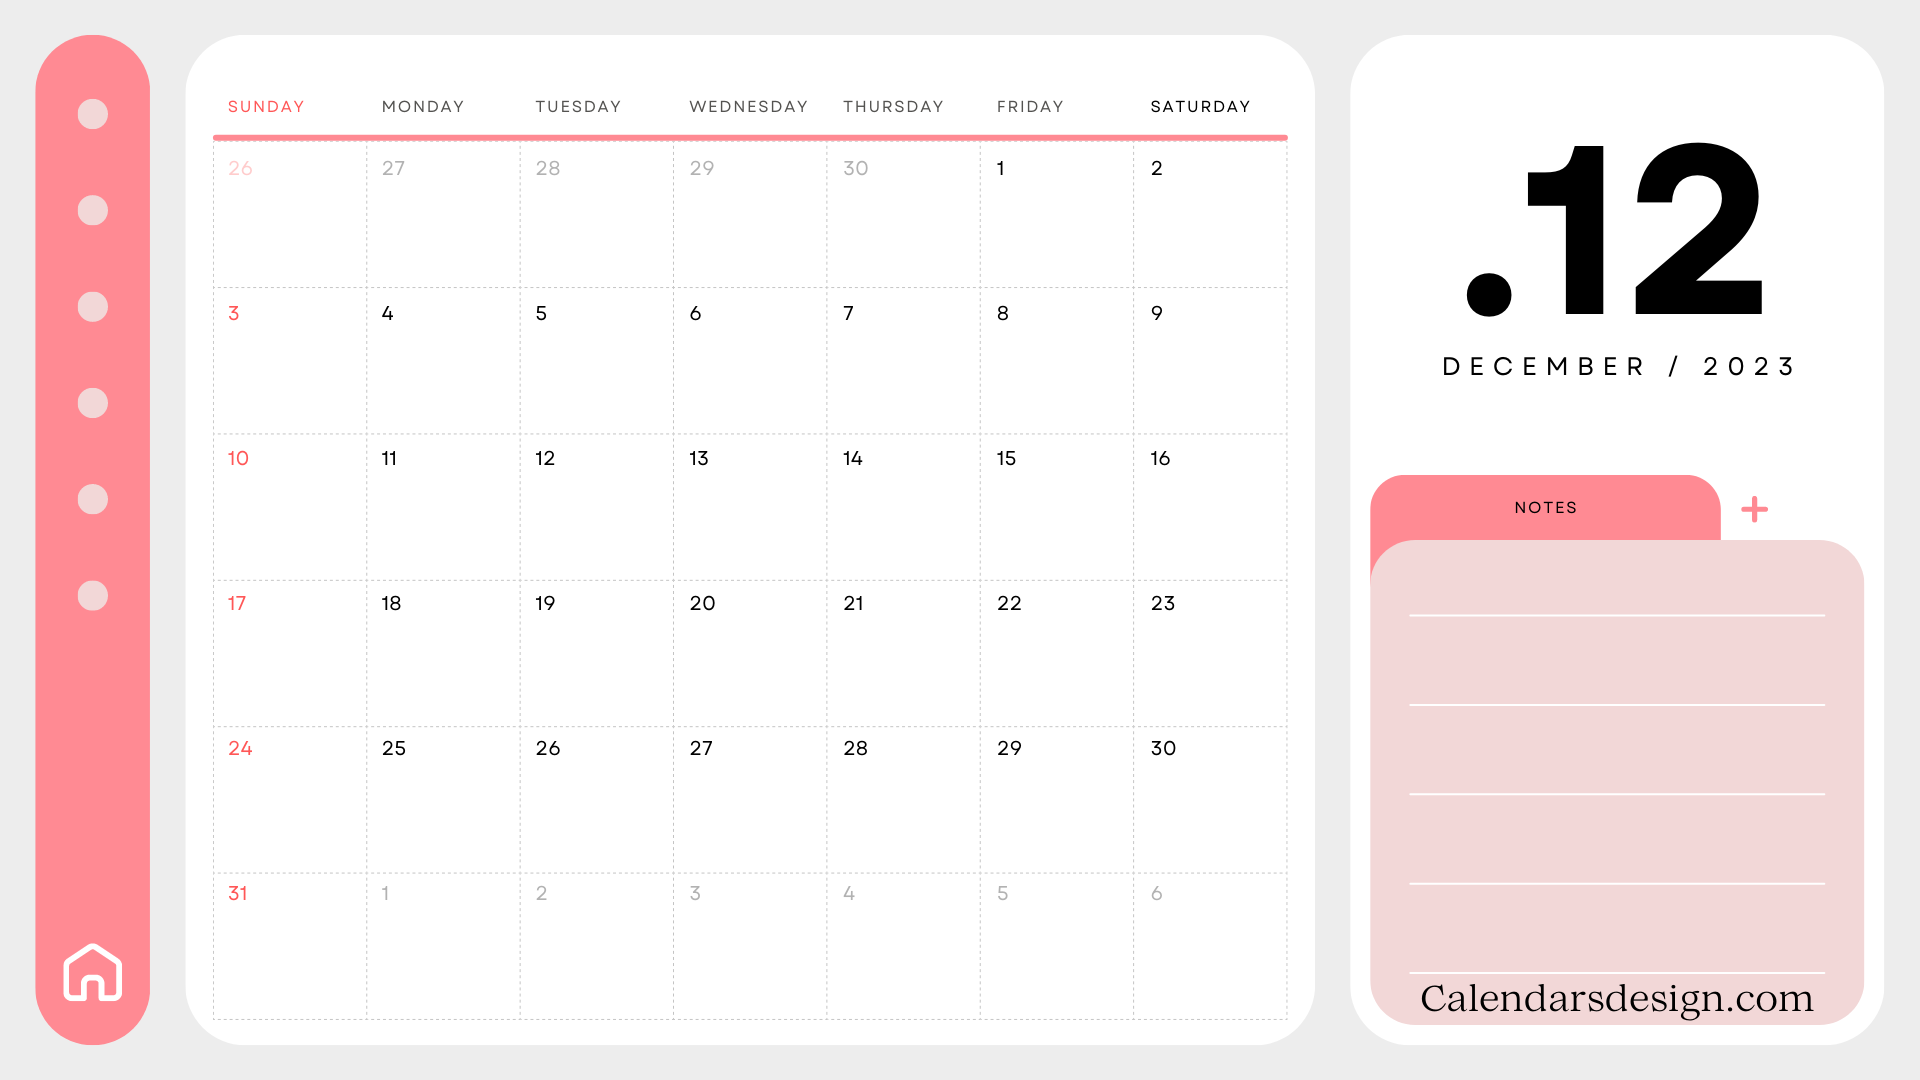 December 2023 Calendar in PDF